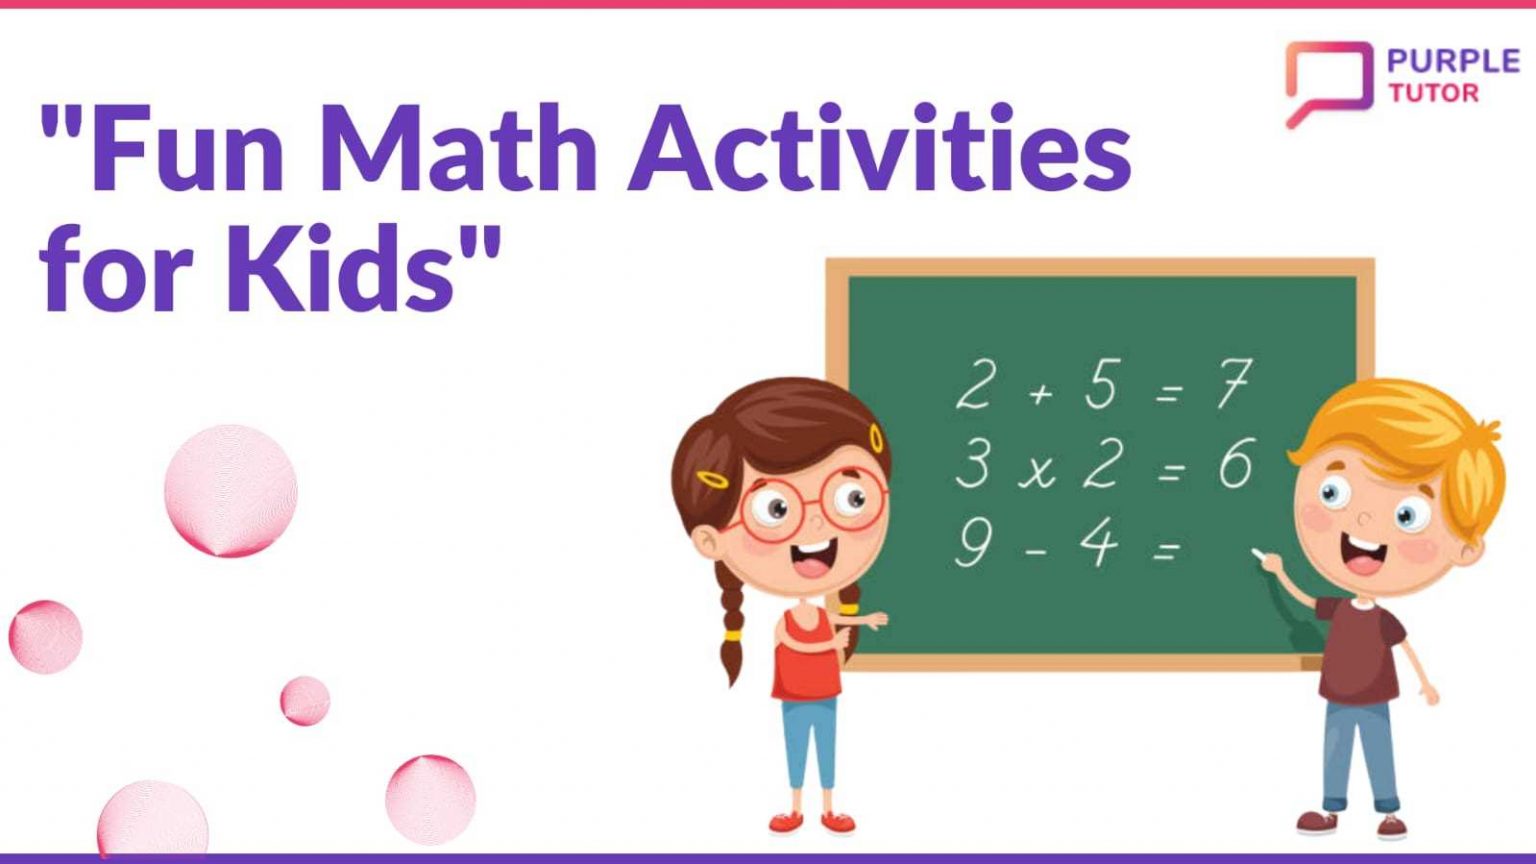 fun-math-activities-for-kids-2023-purpletutor